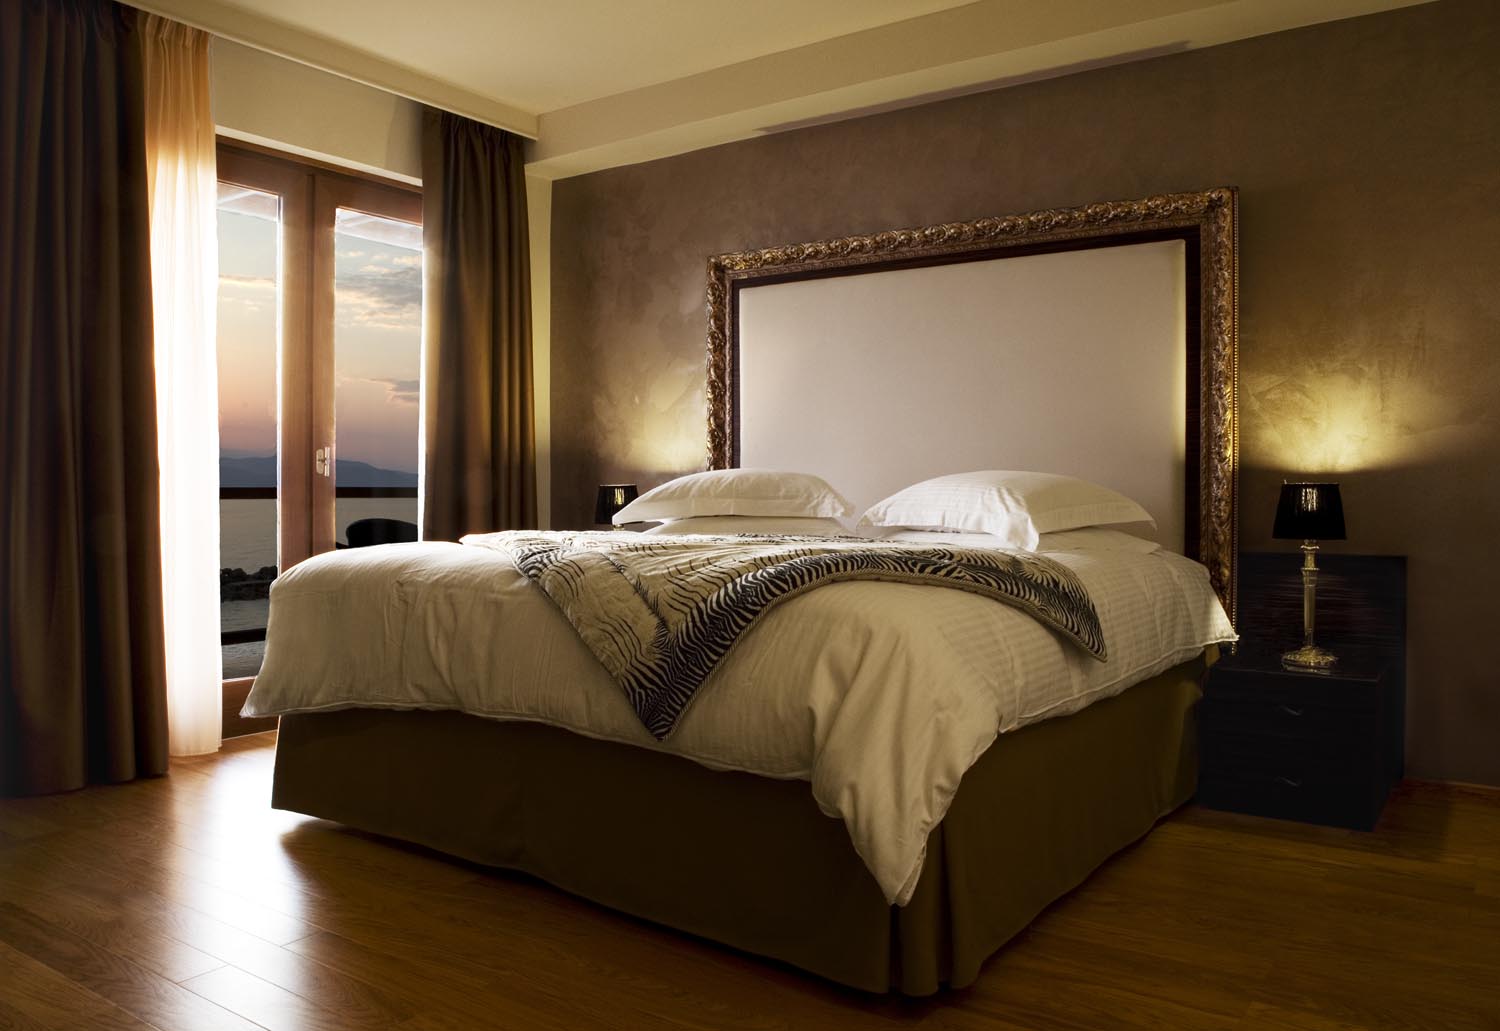 5* Valis Resort Hotel - Βολος ✦ -40% ✦ 3 Ημερες (2 Διανυκτερευσεις) ✦ 2 ατομα + 1 παιδι εως 12 ετων ✦ 8 ✦ 25η Μαρτιου (25/03/2022 εως 28/03/2022) ✦ Ένα Αyurveda Massage διαρκειας 15 λεπτων!